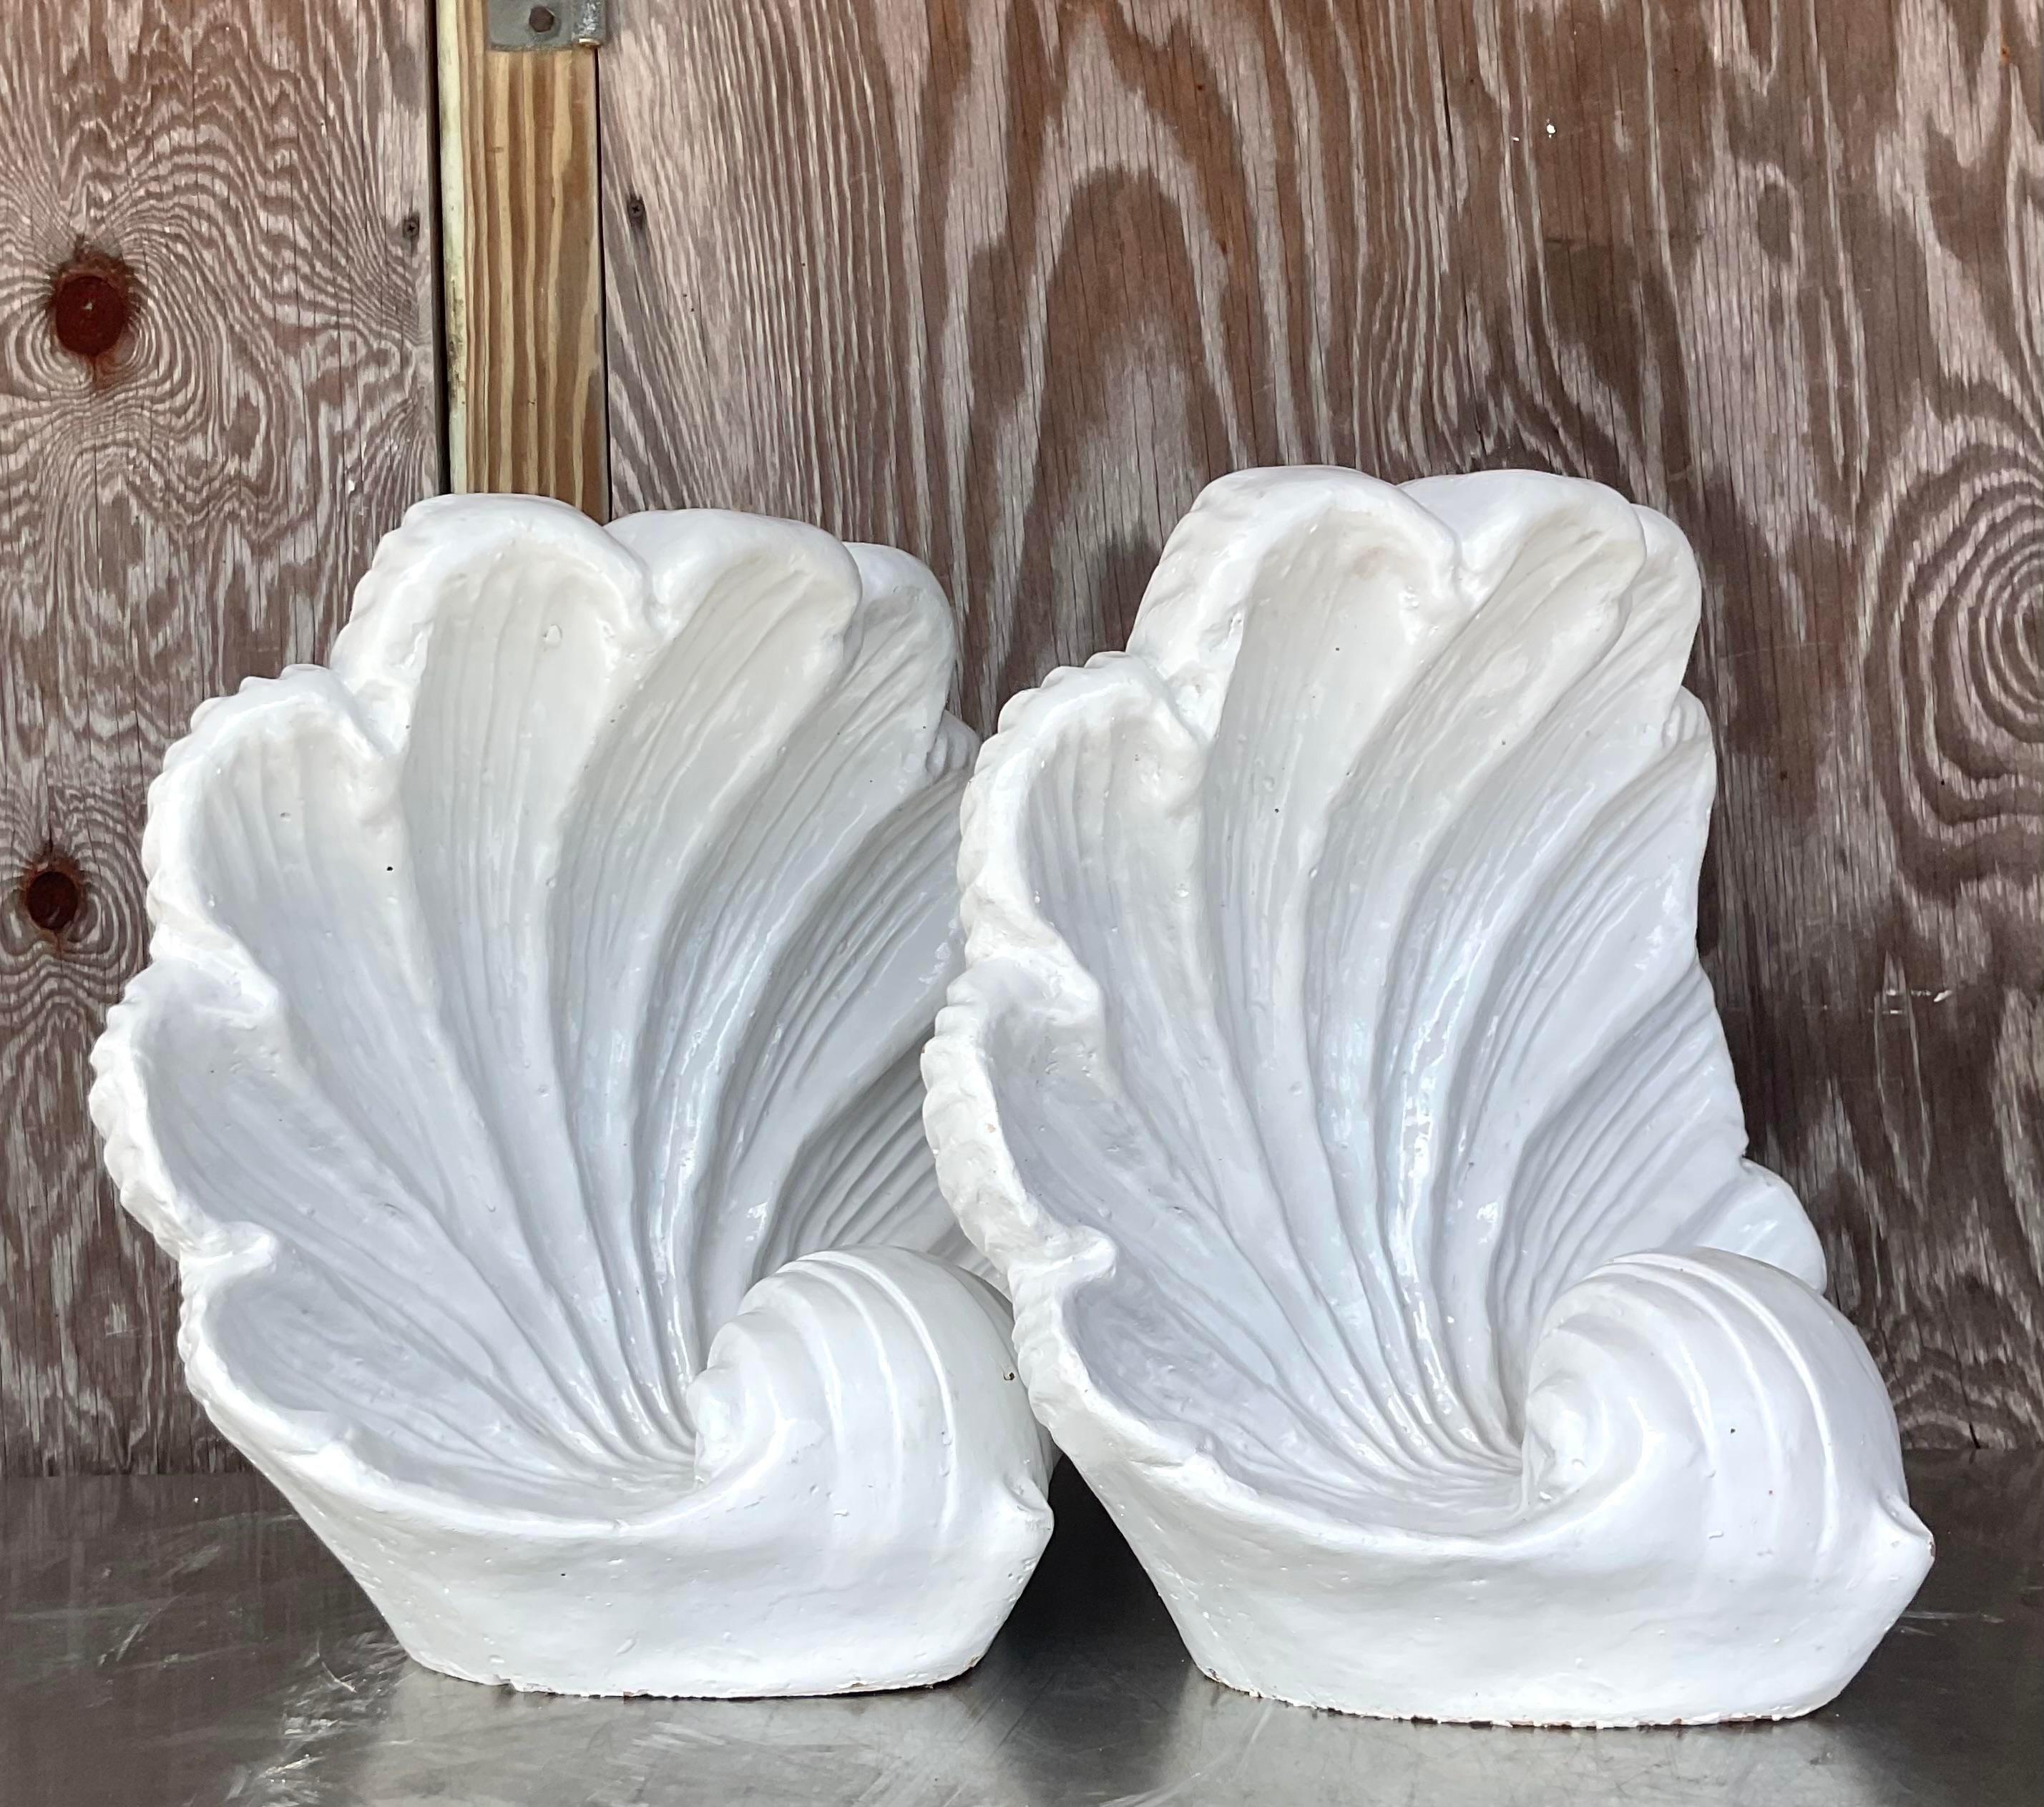 20th Century Vintage Coastal Glazed Ceramic Clam Shells - a Pair For Sale